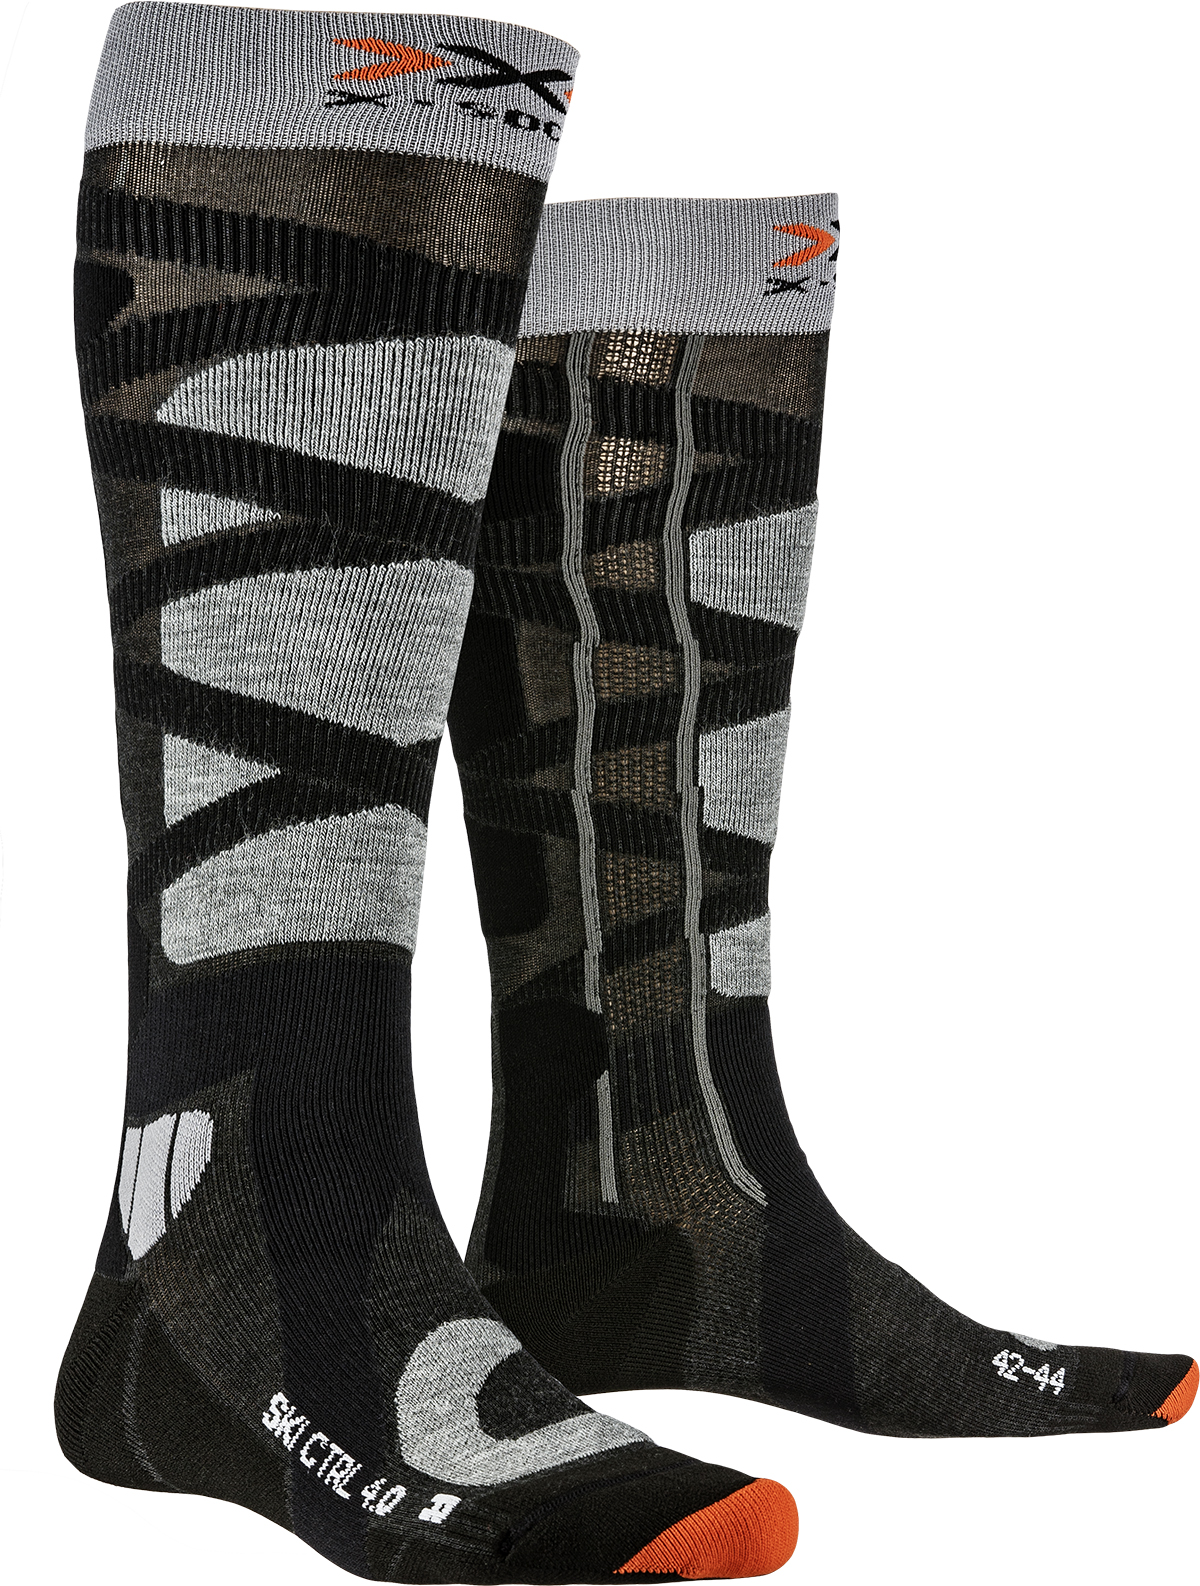 X-Socks Ski Control 4.0 Anthracite Melange/Stone Grey Melange (42-44)